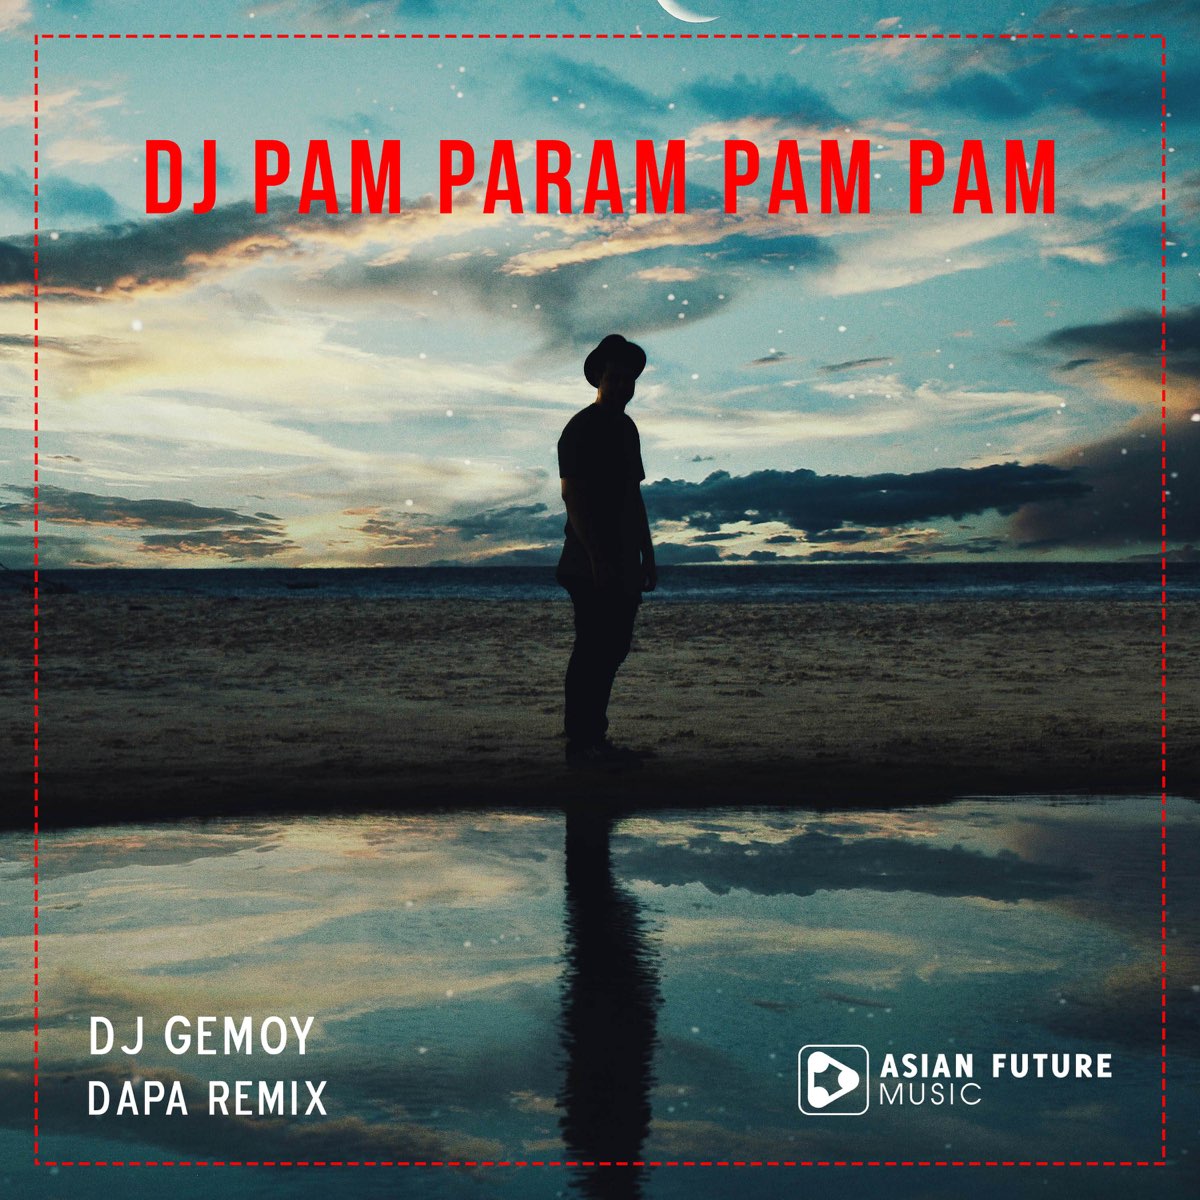 DJ Pam Param Pam Pam (feat. DAPA REMIX) - Single by DJ Gemoy on Apple Music